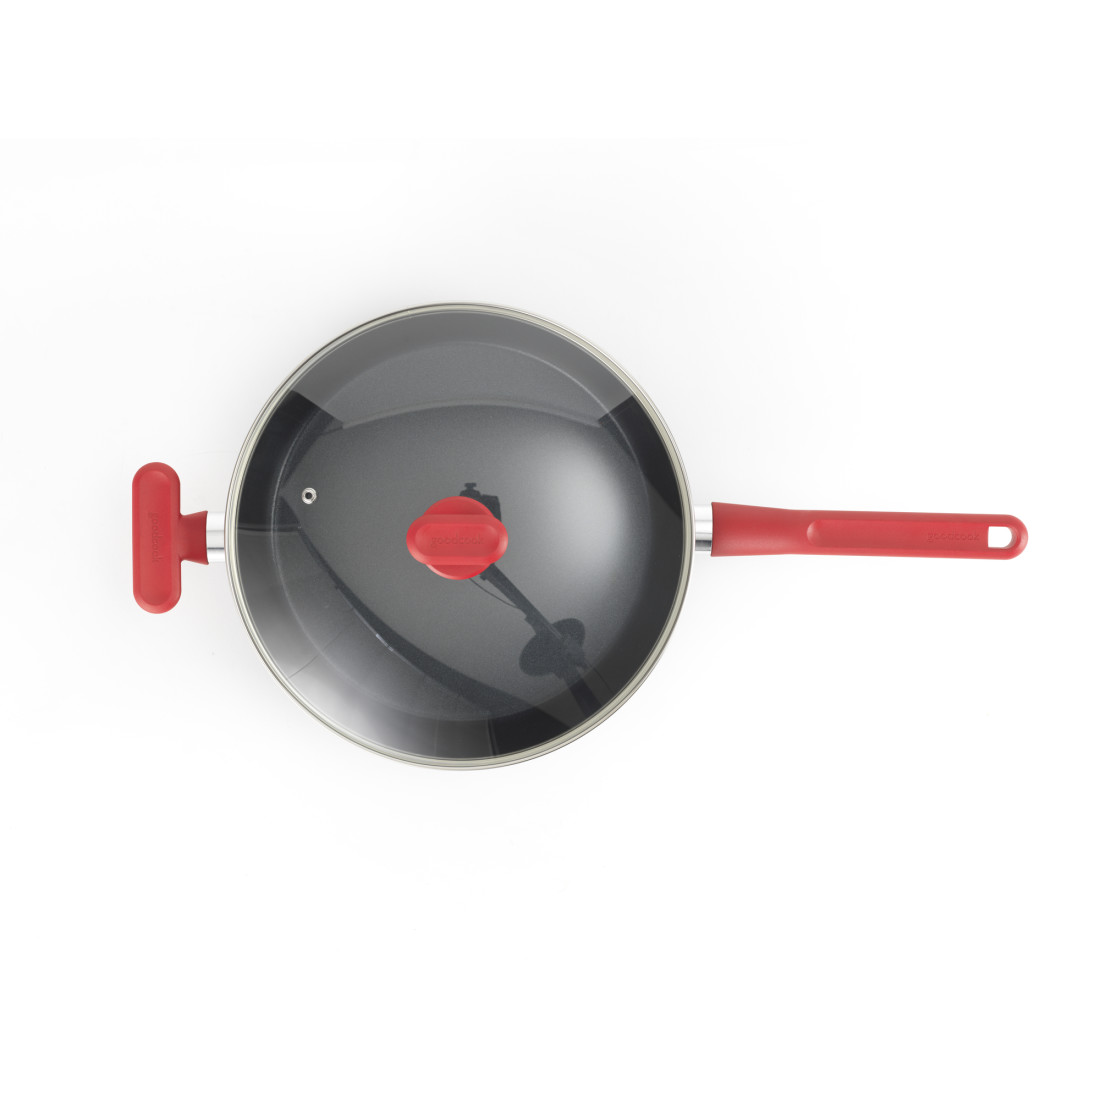 GoodCook ProEase Nonstick 12 Piece Cookware Set with Utensils, Black -  GoodCook